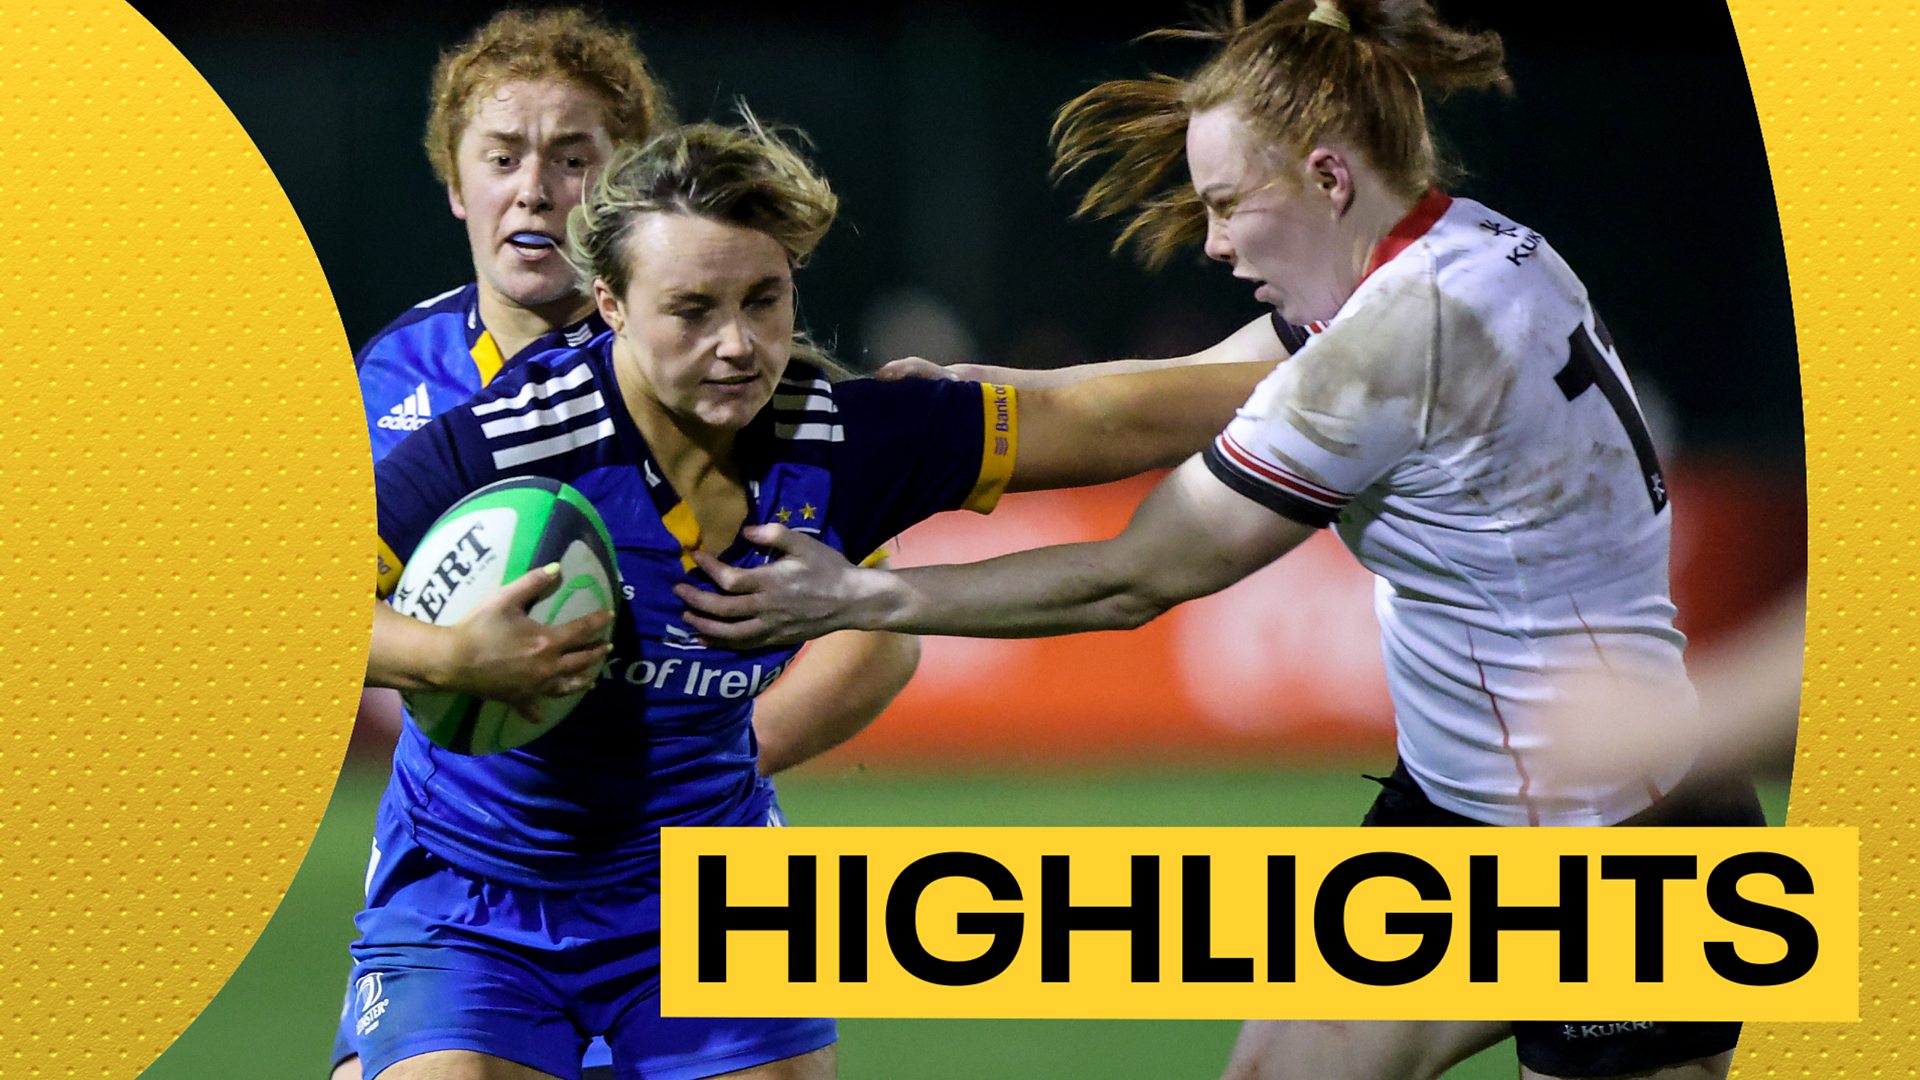 Ulster 0-43 Leinster Watch highlights from the Womens Interpro match